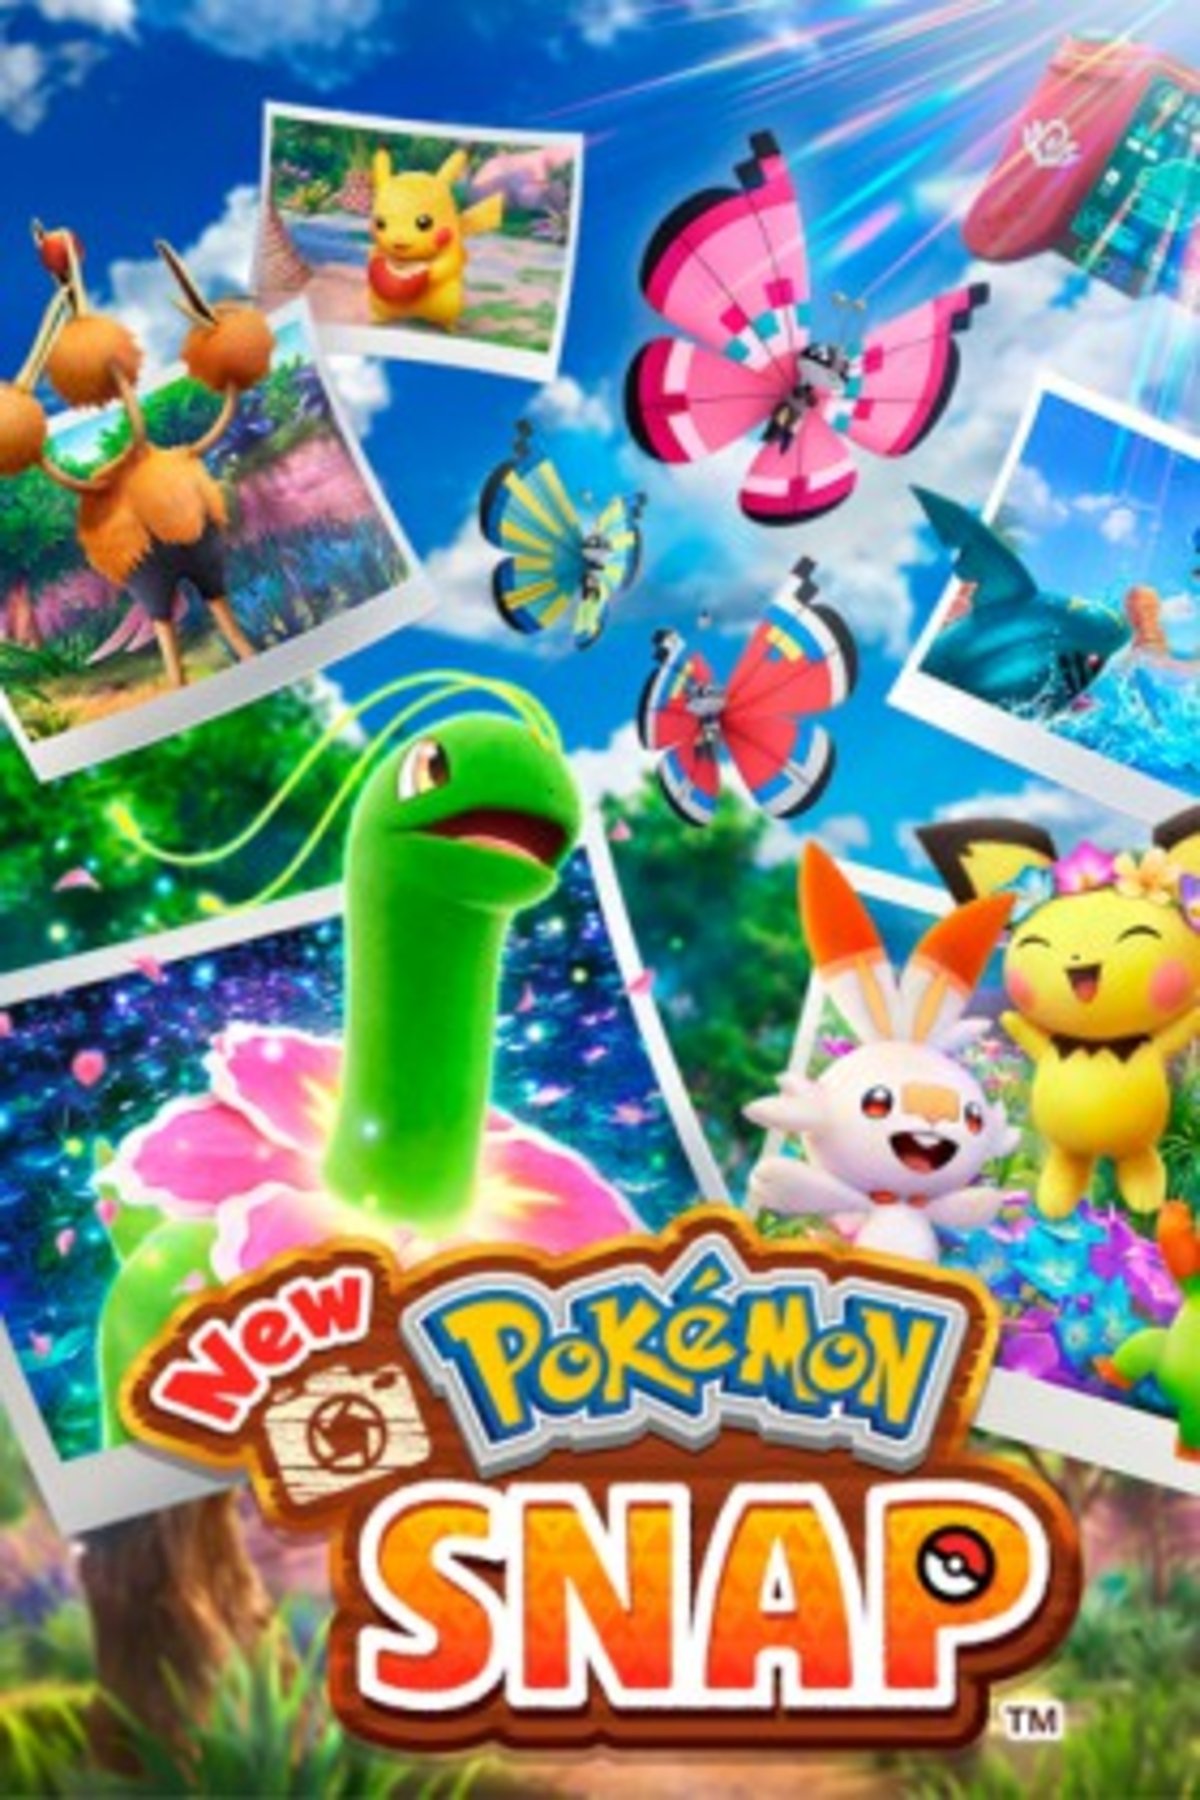 New Pokémon Snap announces a DLC with three new zones totally free